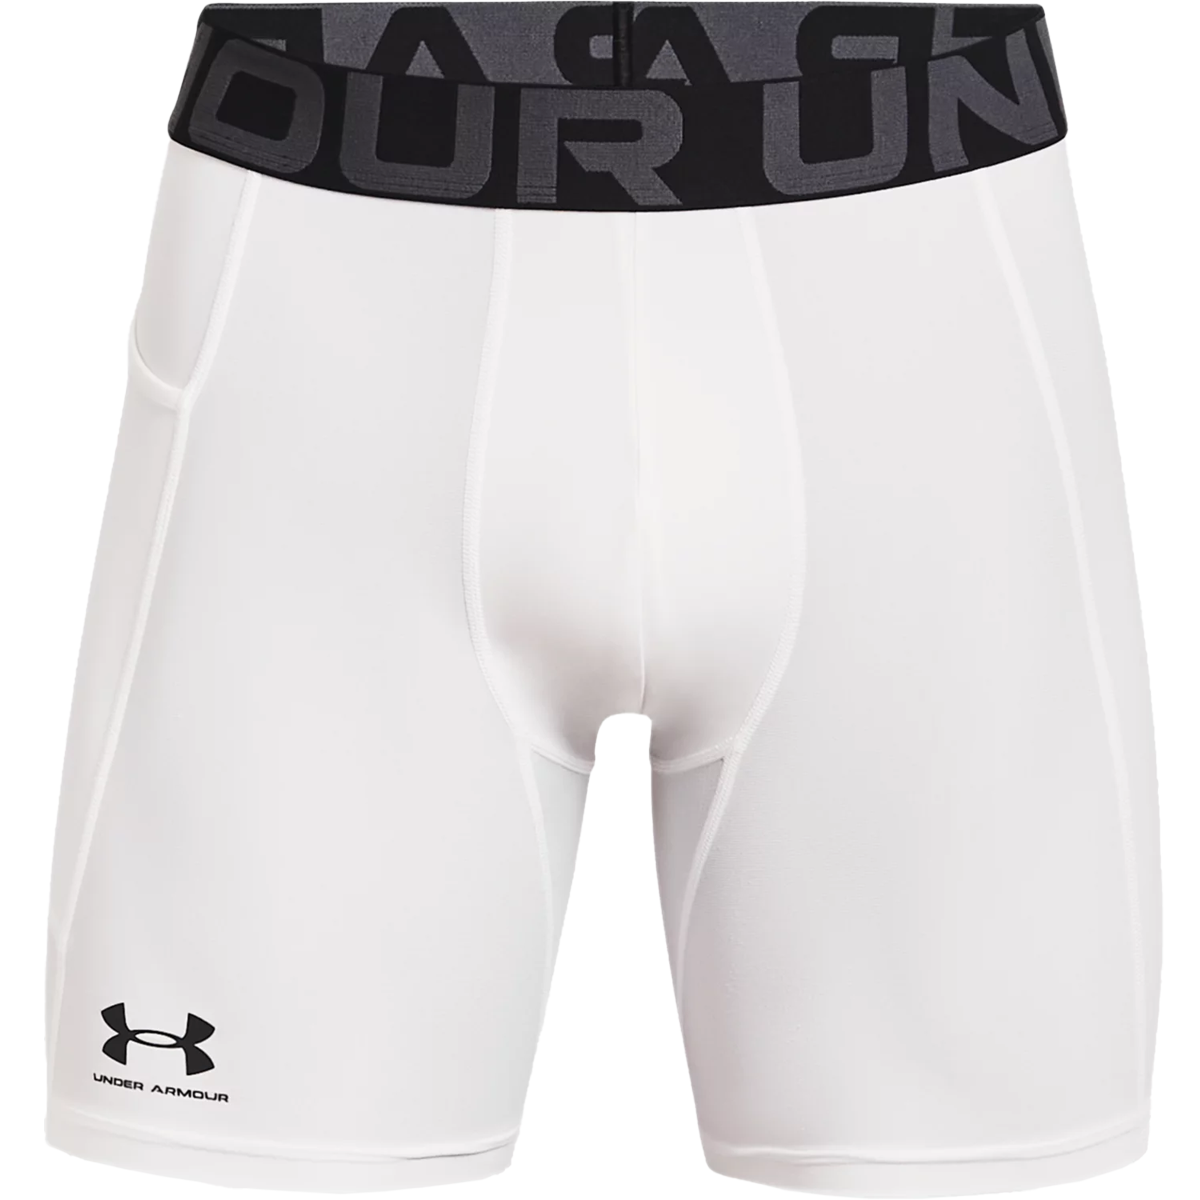 Nike Pro Combat Men's 6 Compression Shorts Underwear (2X-Large